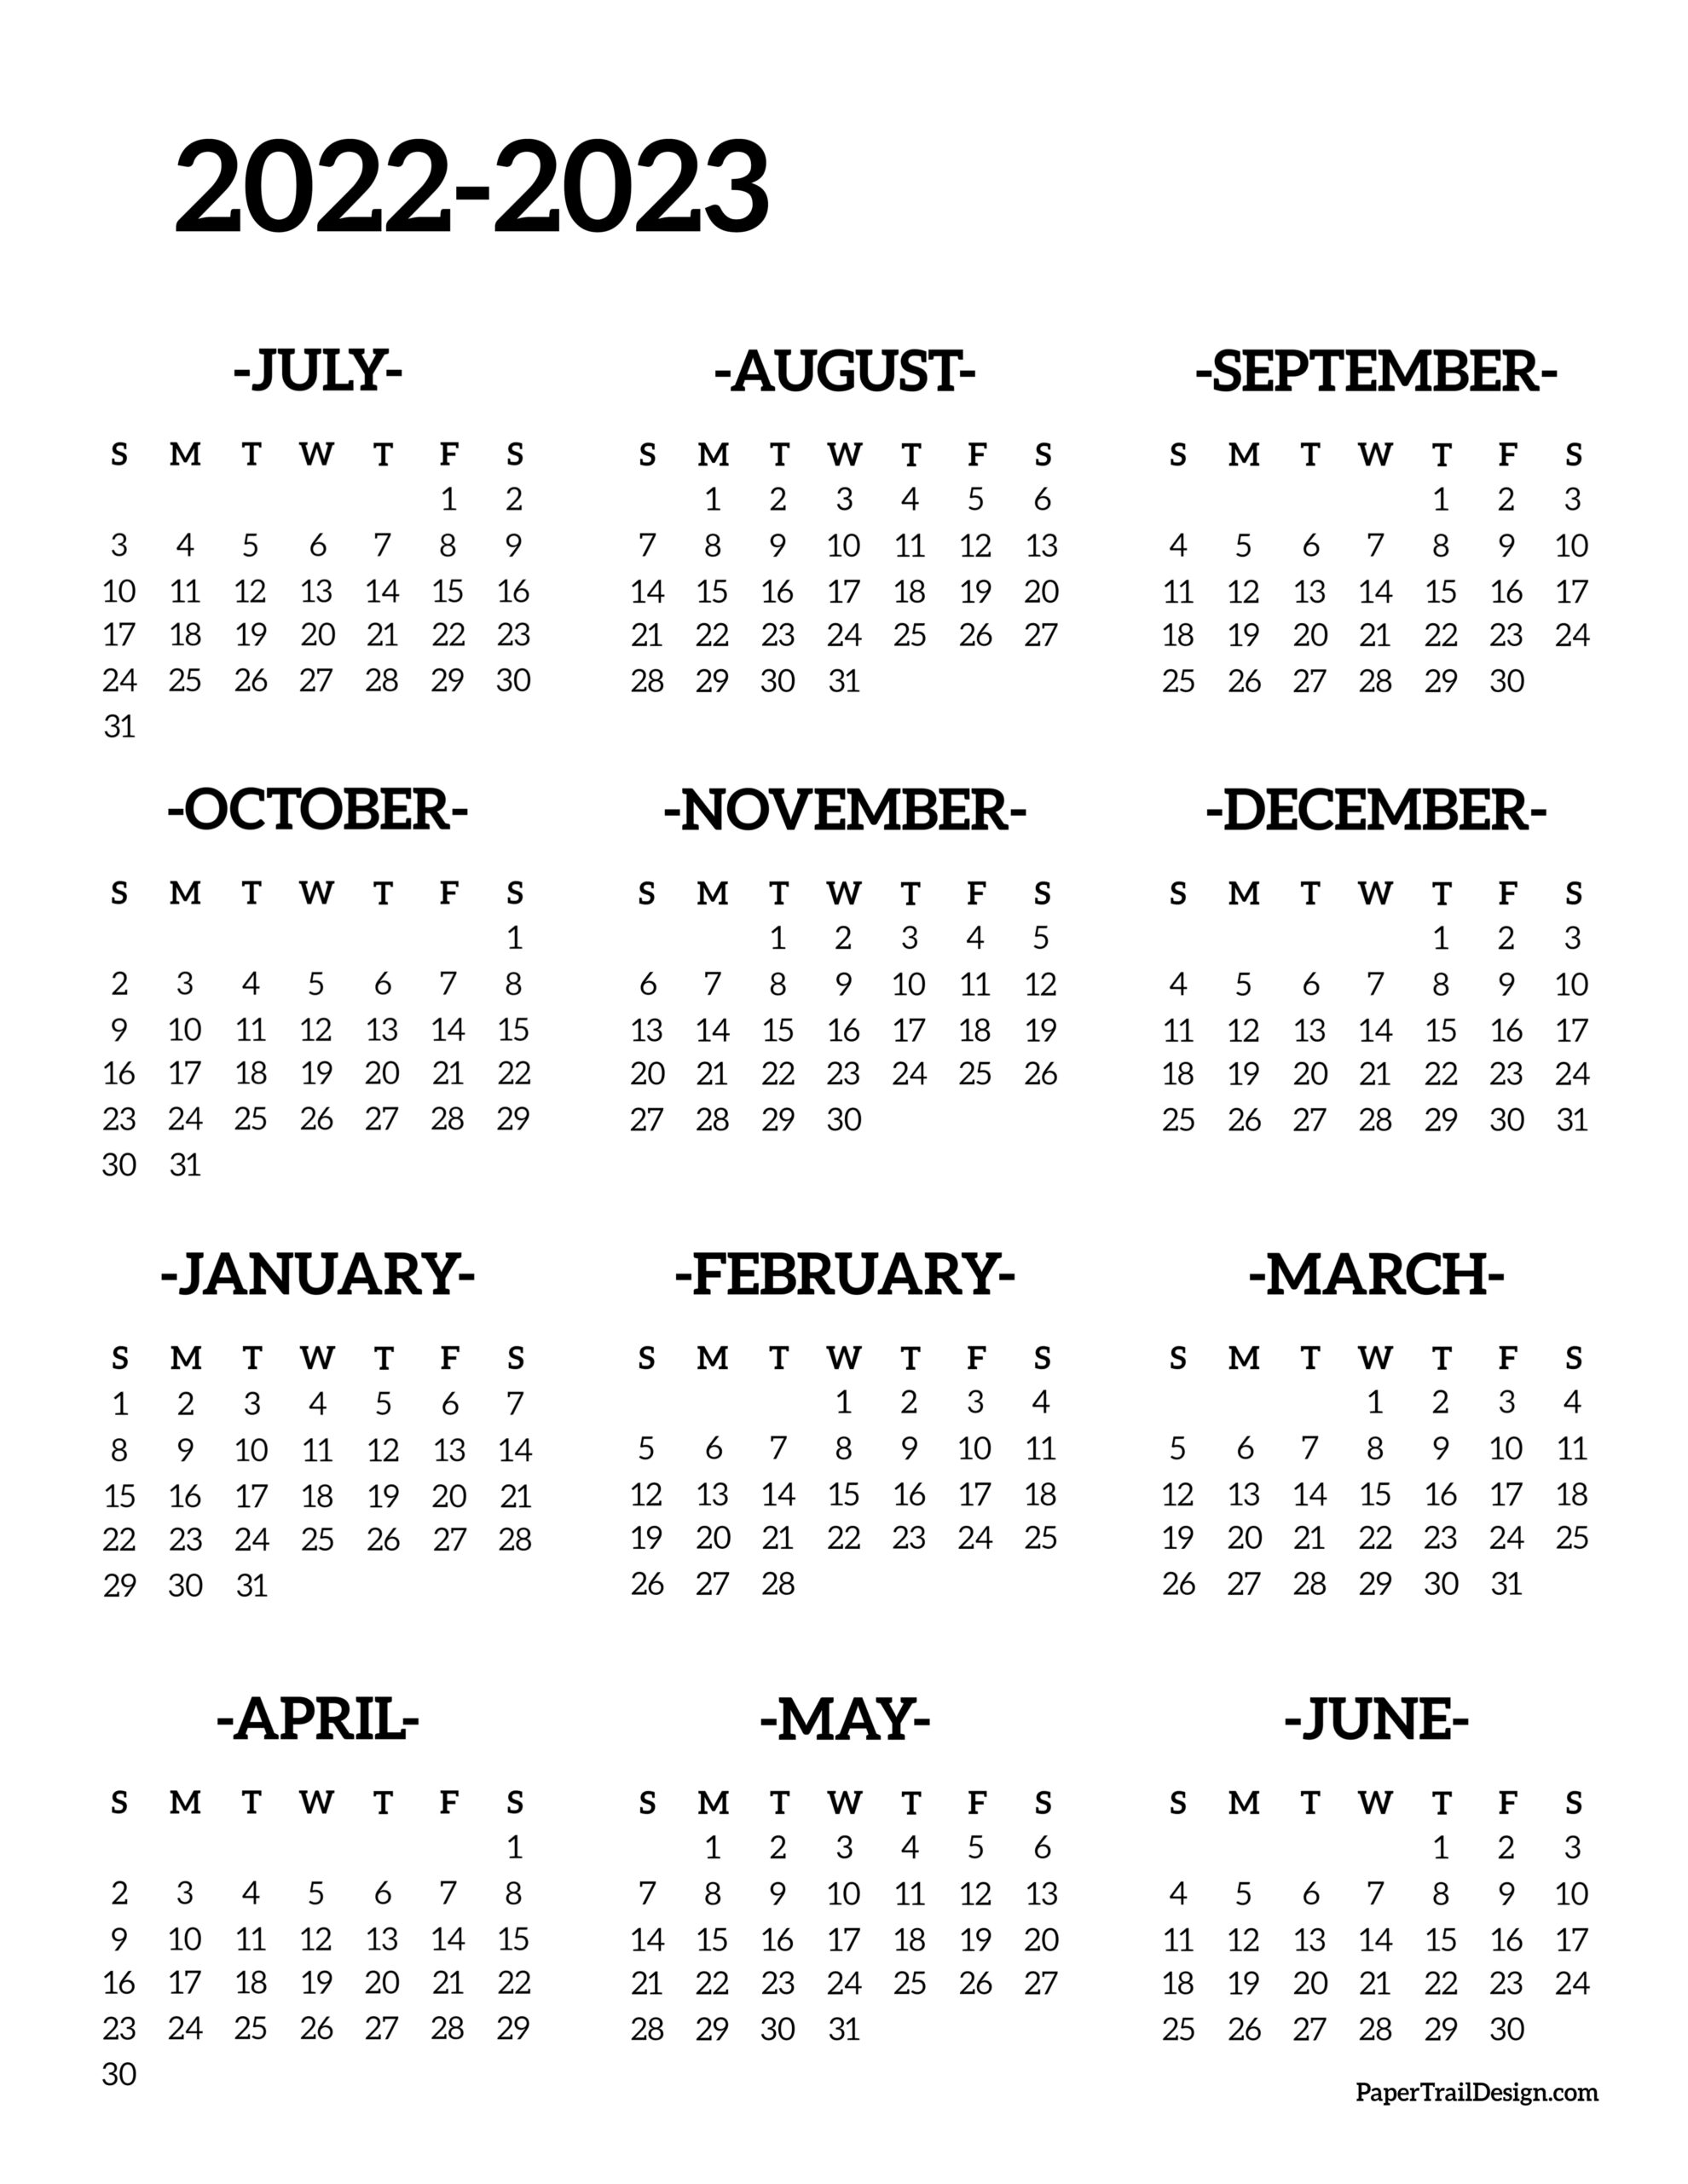 K12 Calendar 2022 2023 2022-2023 School Year Calendar Free Printable - Paper Trail Design